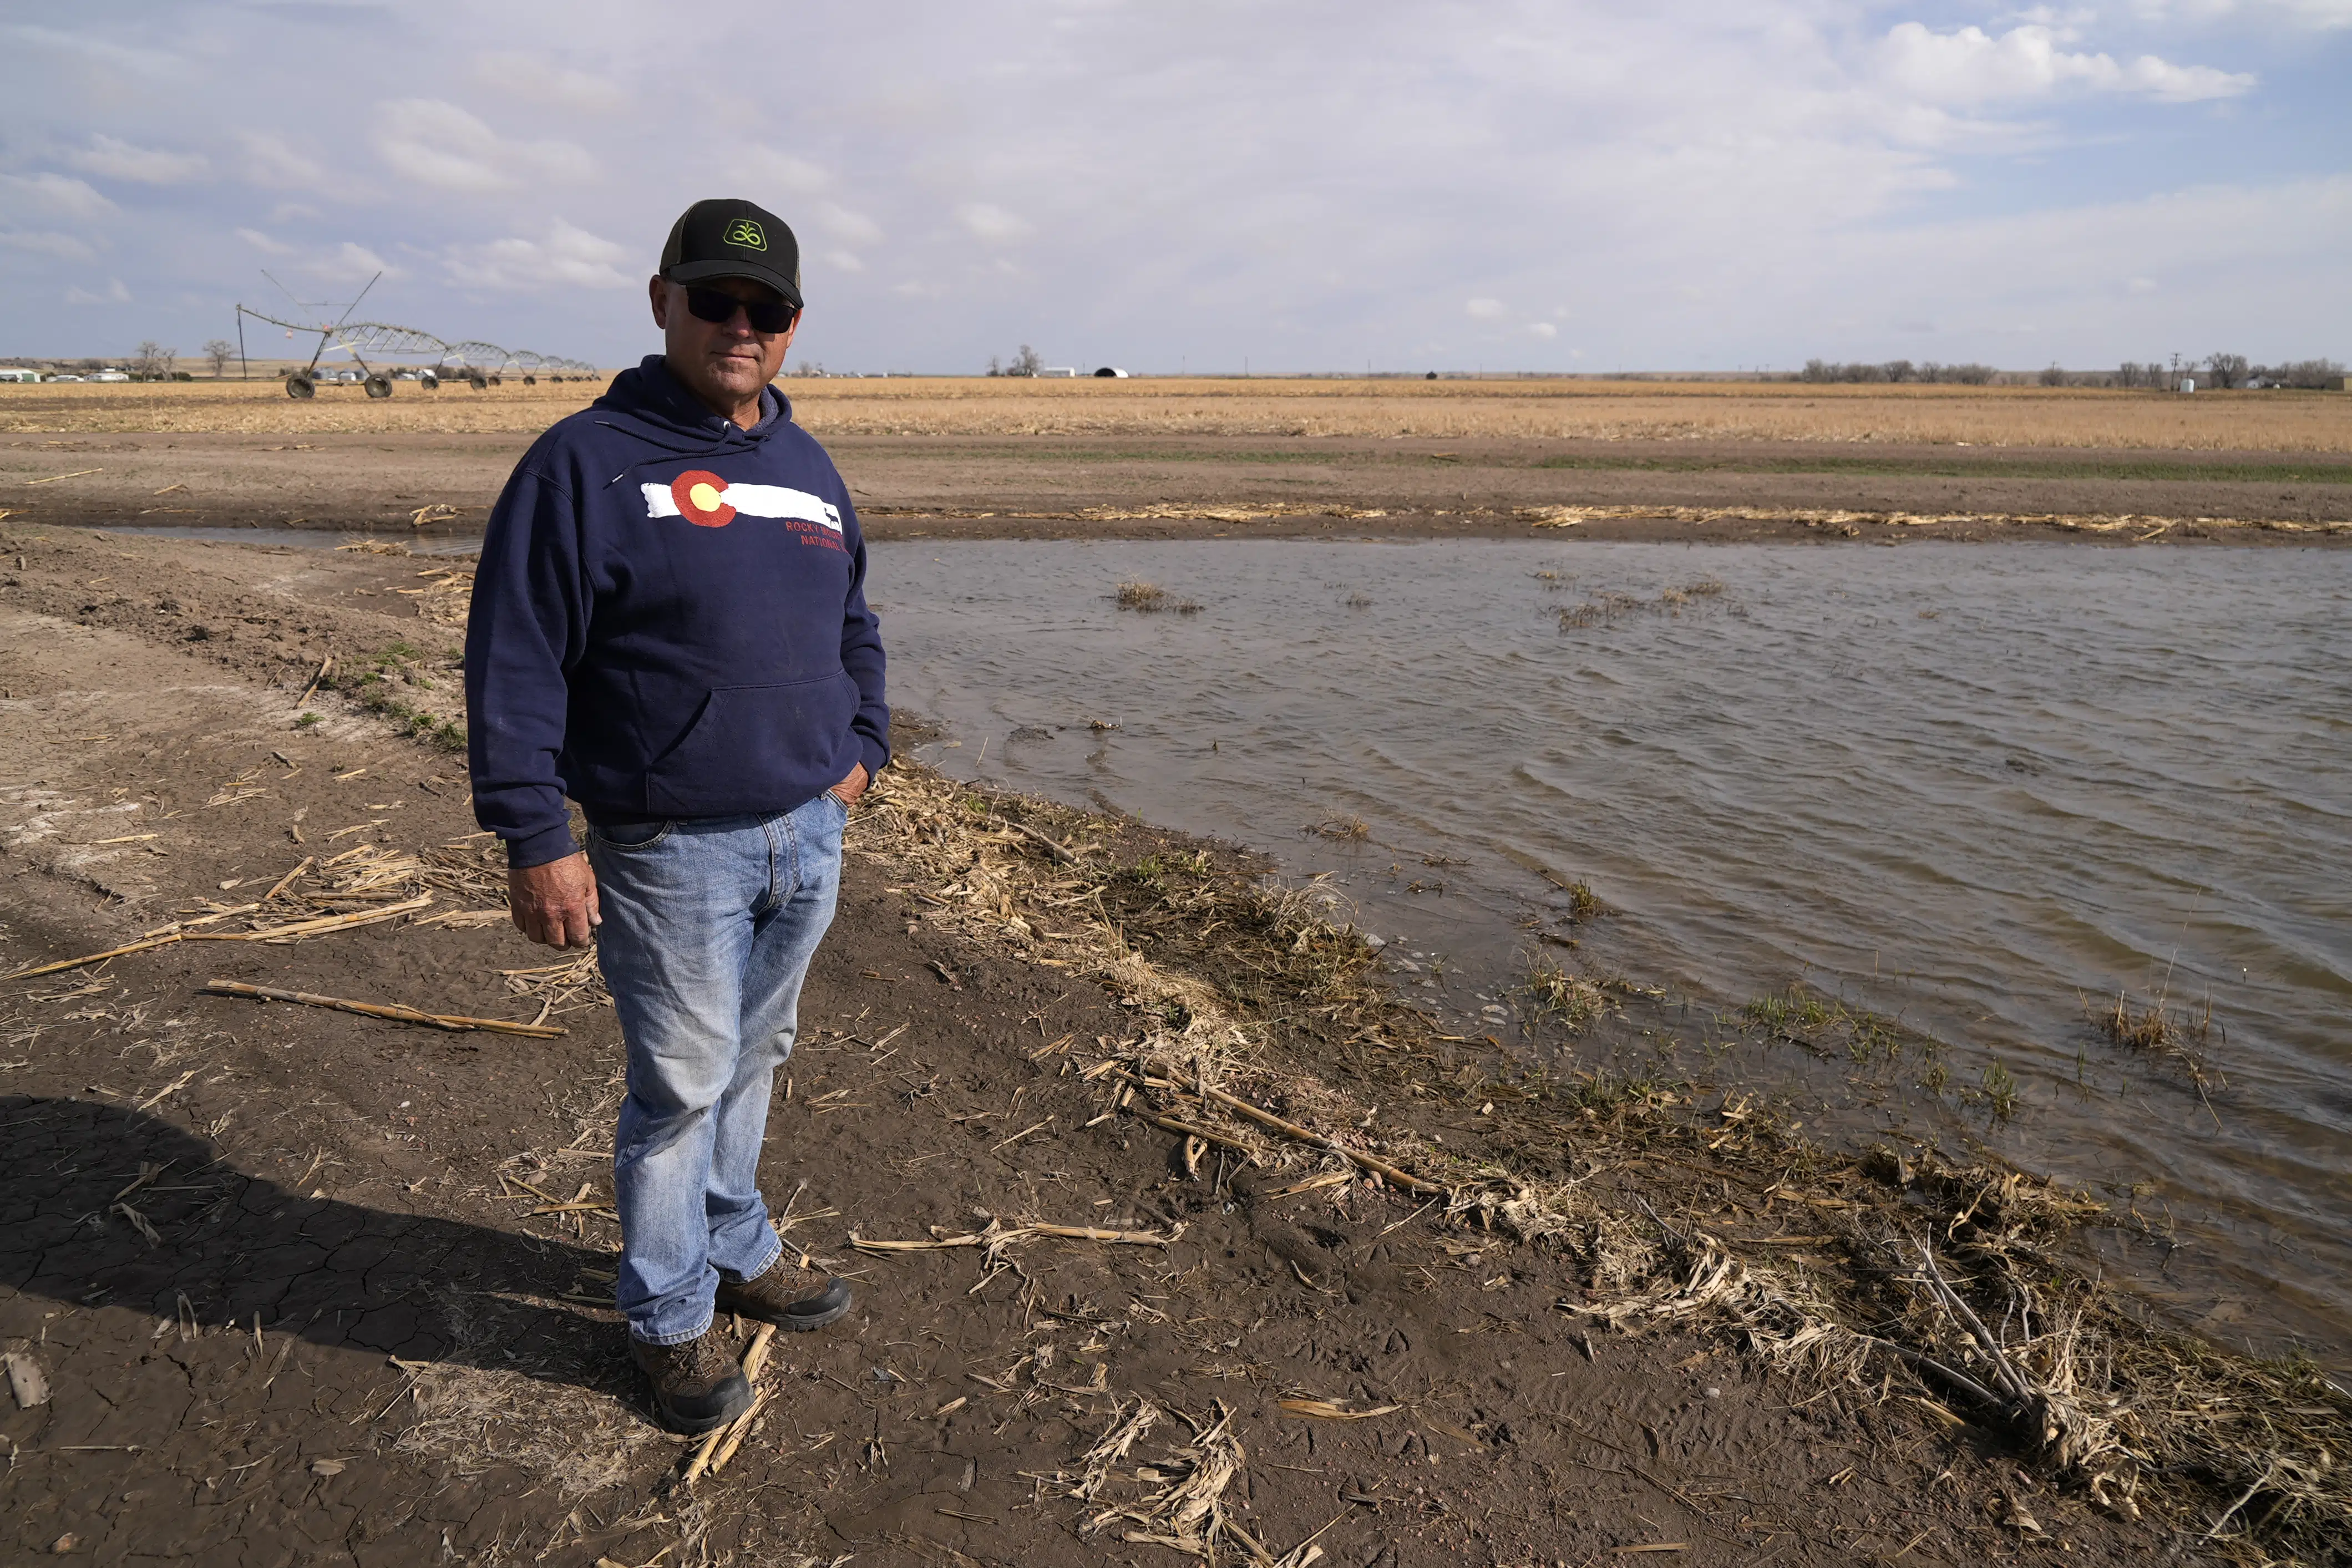 Colorado, Nebraska Jostle Over Water Rights Amid Drought